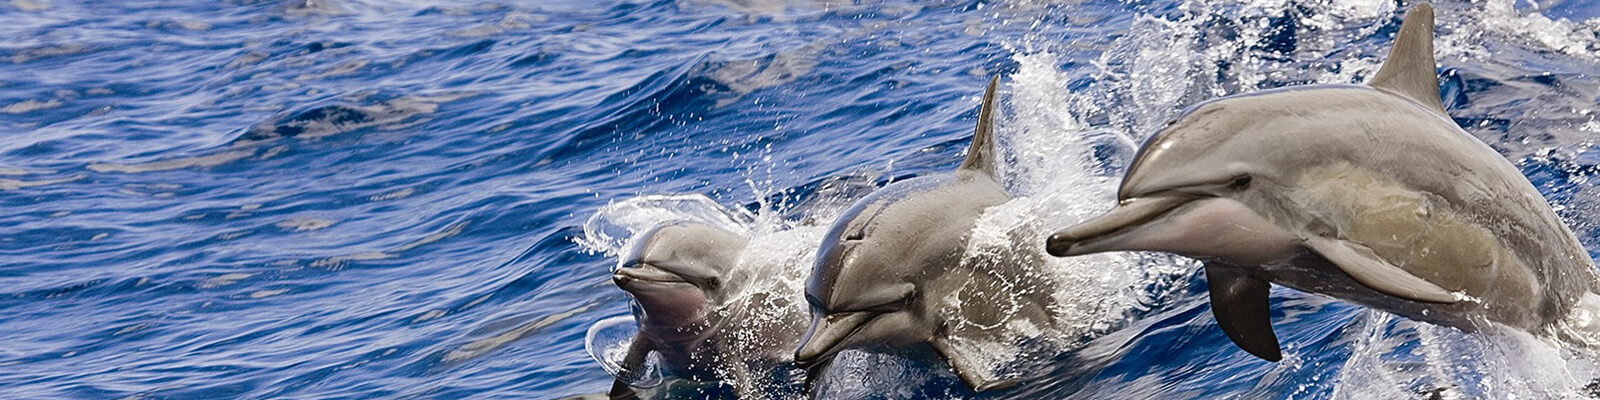 Deluxe Snorkel Dolphin Watch Hawaii Coupons